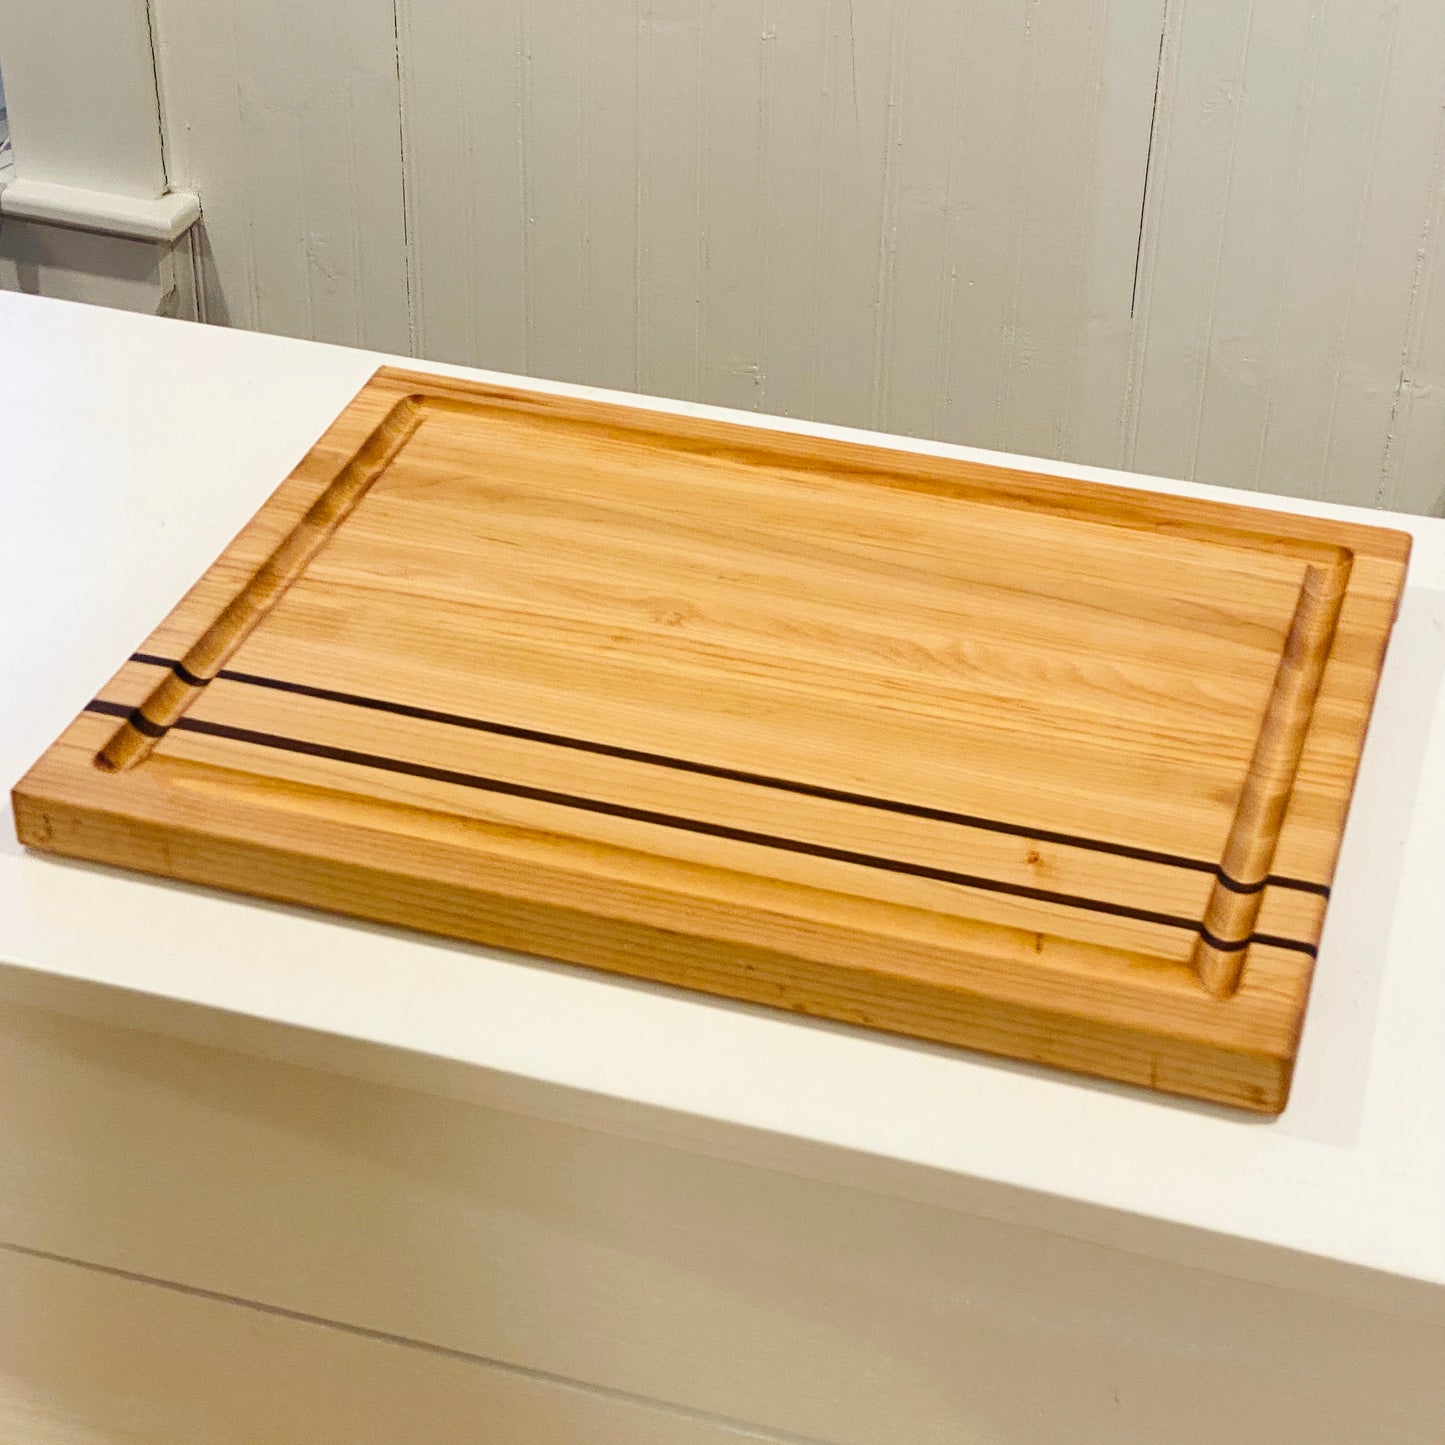 Coastal Maine Woodcrafts - cutting board with drip edge